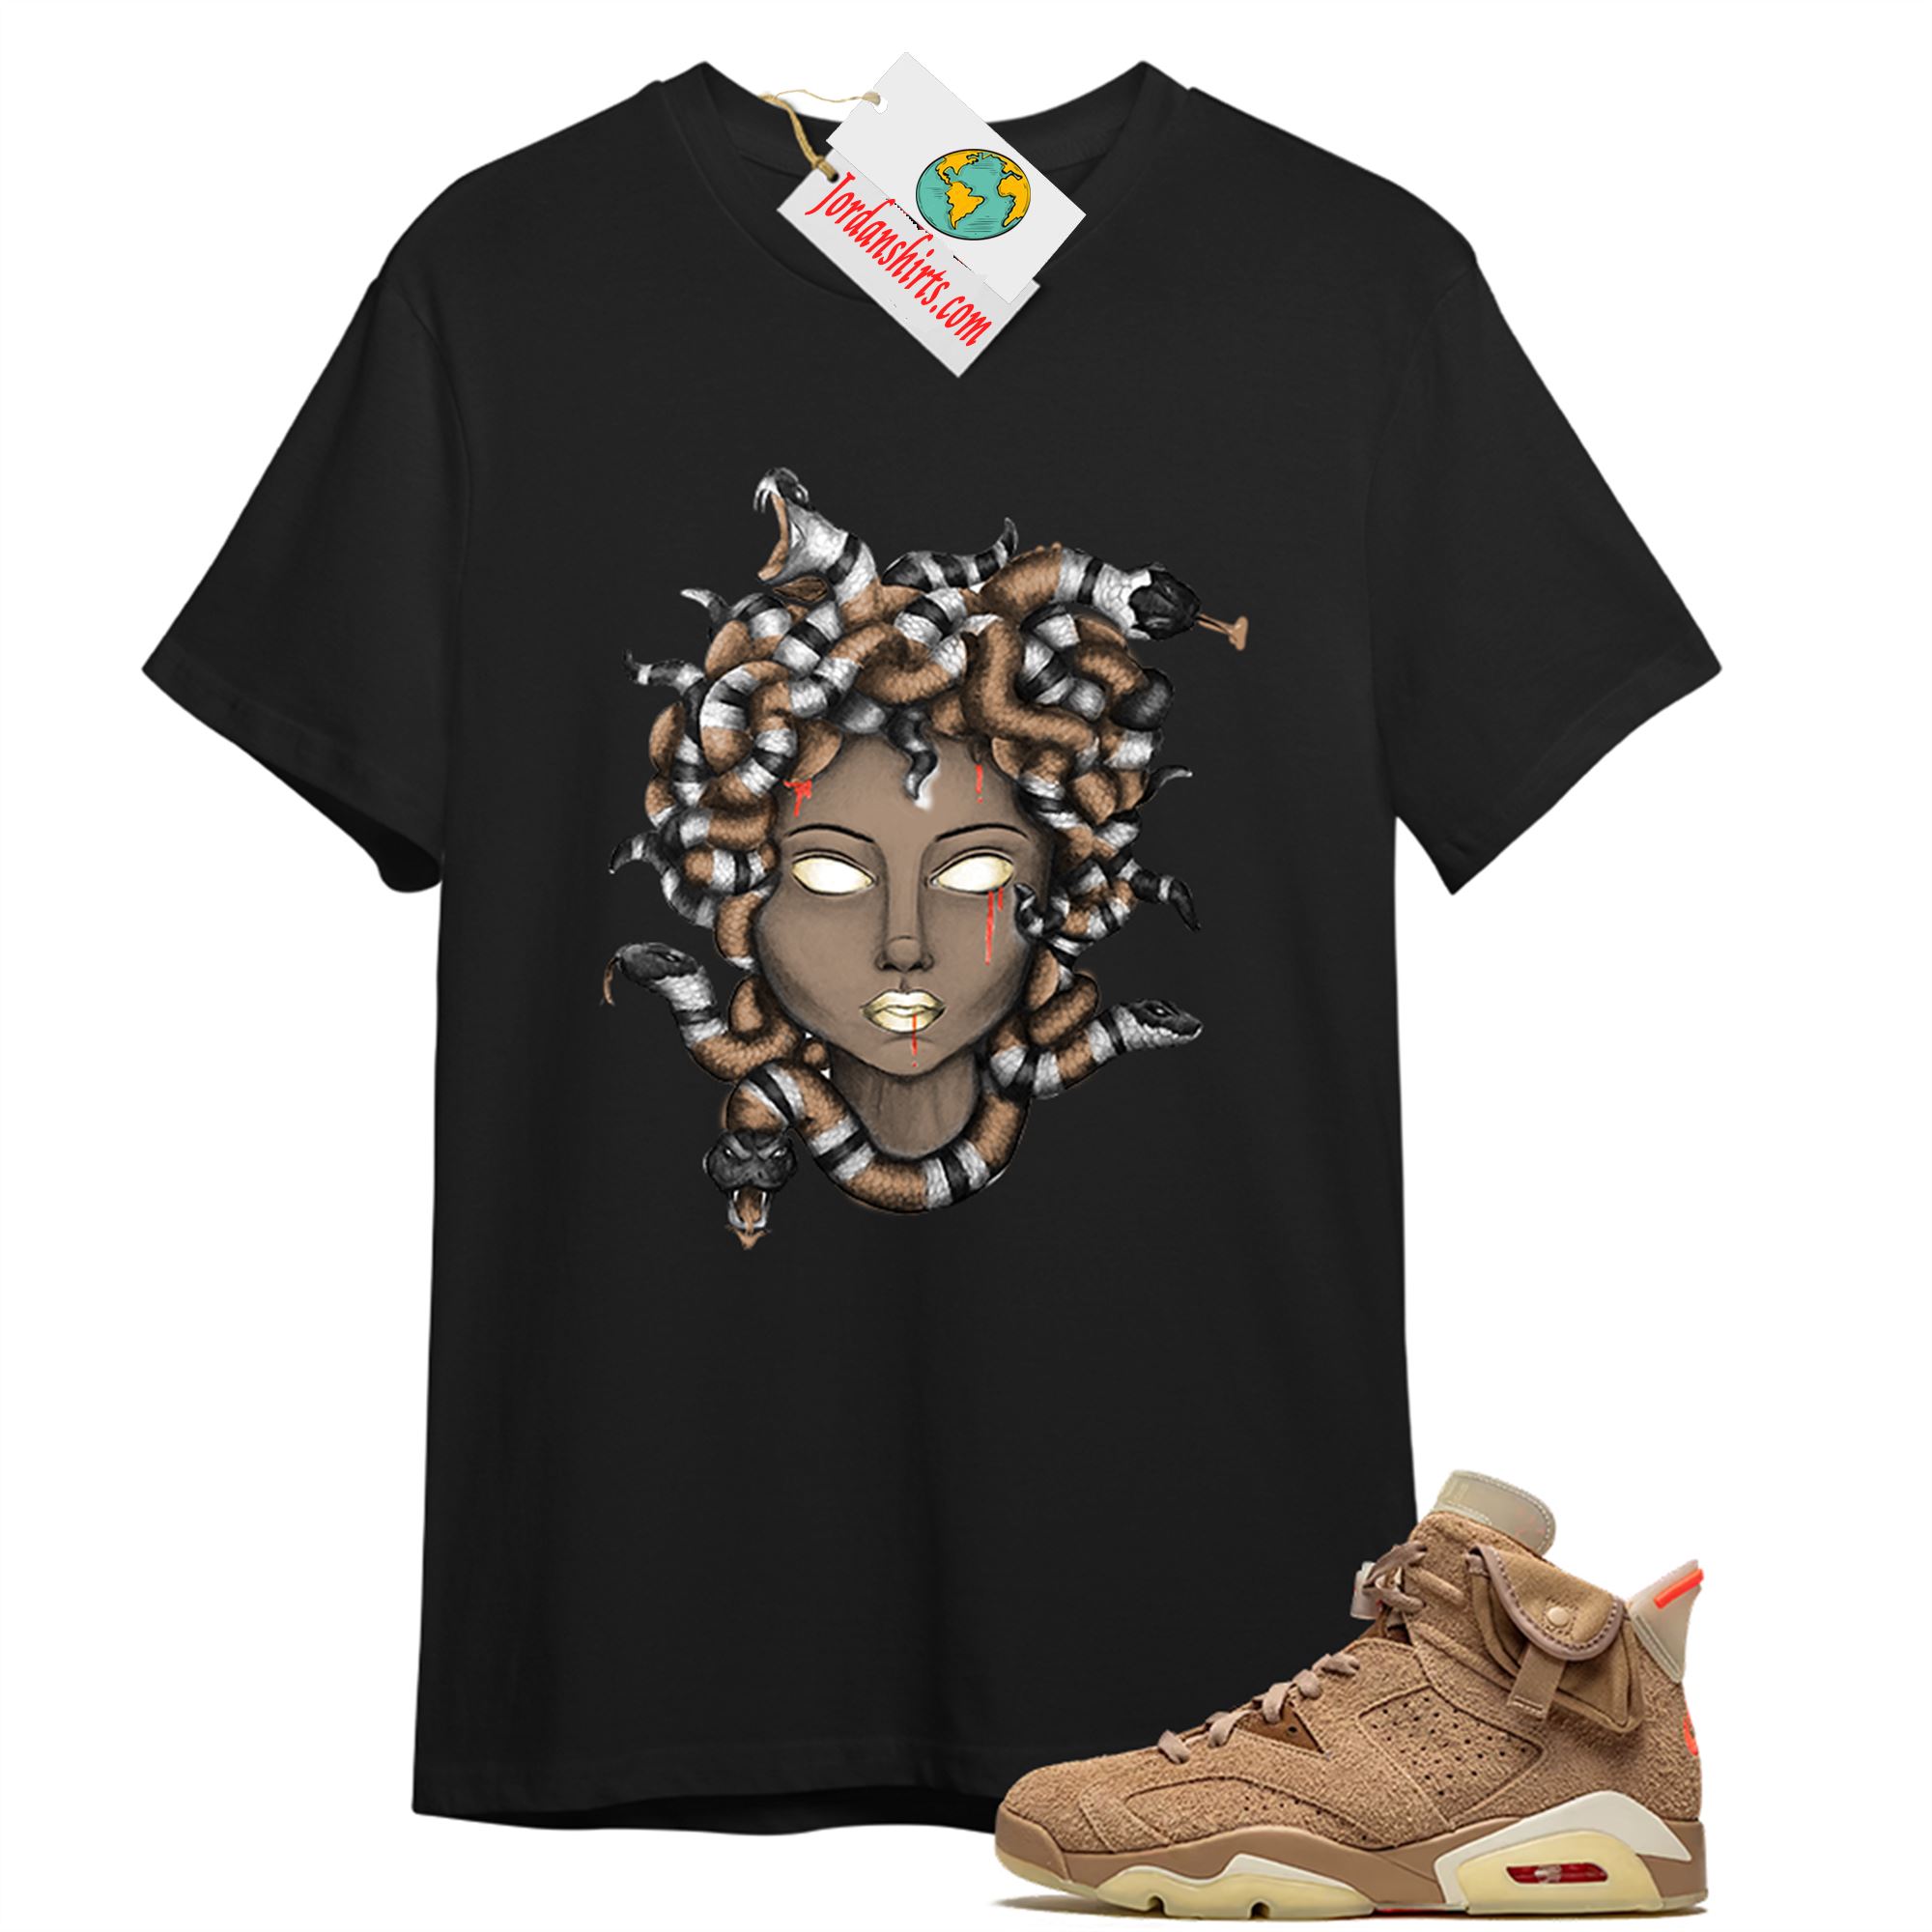 Jordan 6 Shirt, Medusa Snake Hair Black T-shirt Air Jordan 6 Travis Scott 6s Size Up To 5xl